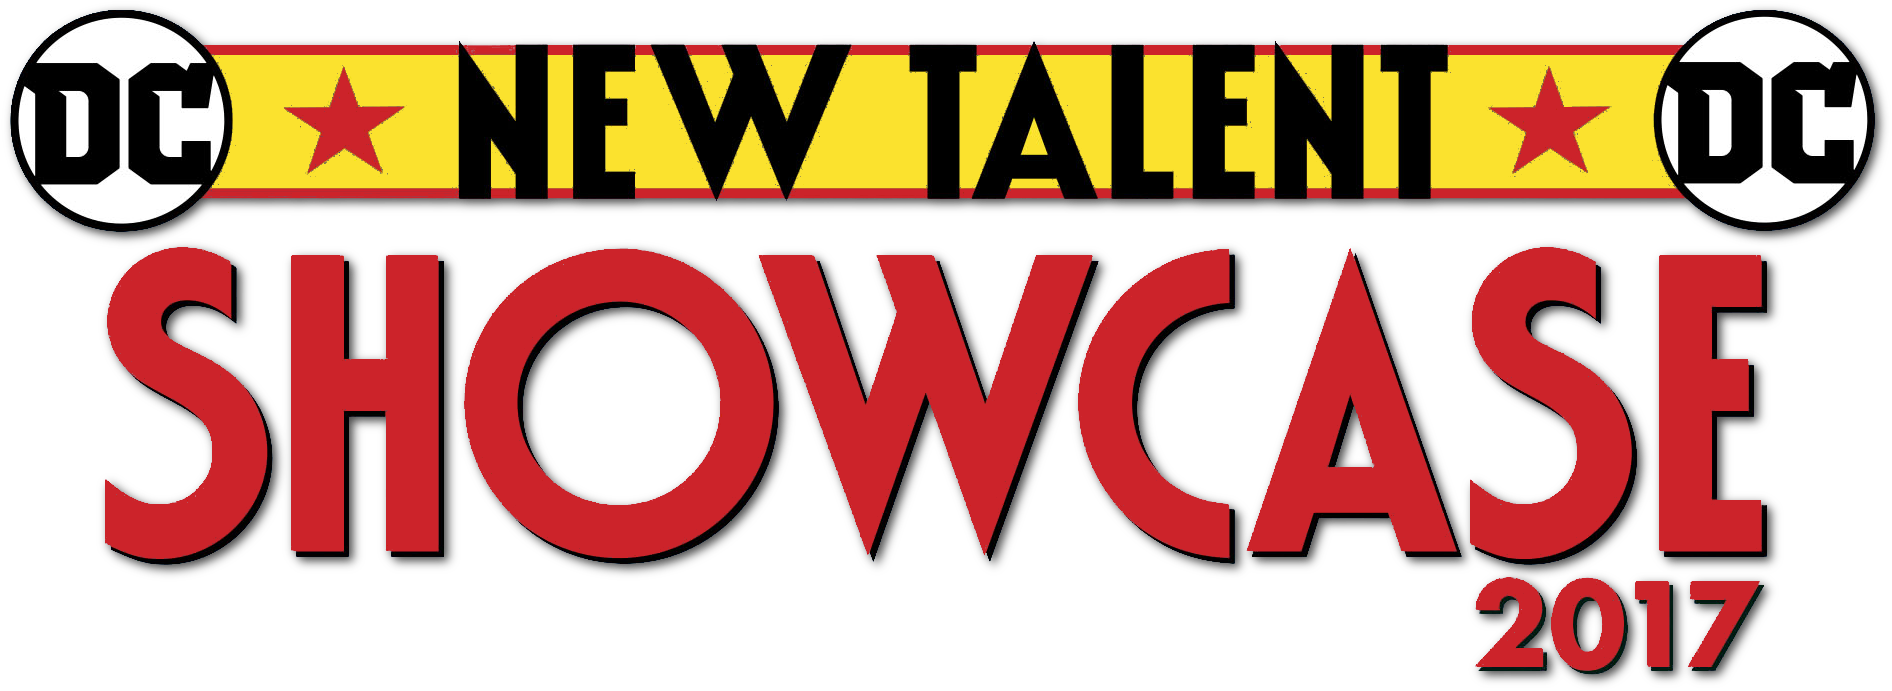 New Talent Showcase 2017 Logo - Dc Comics 3 T-shirts Swagbox (1925x700), Png Download